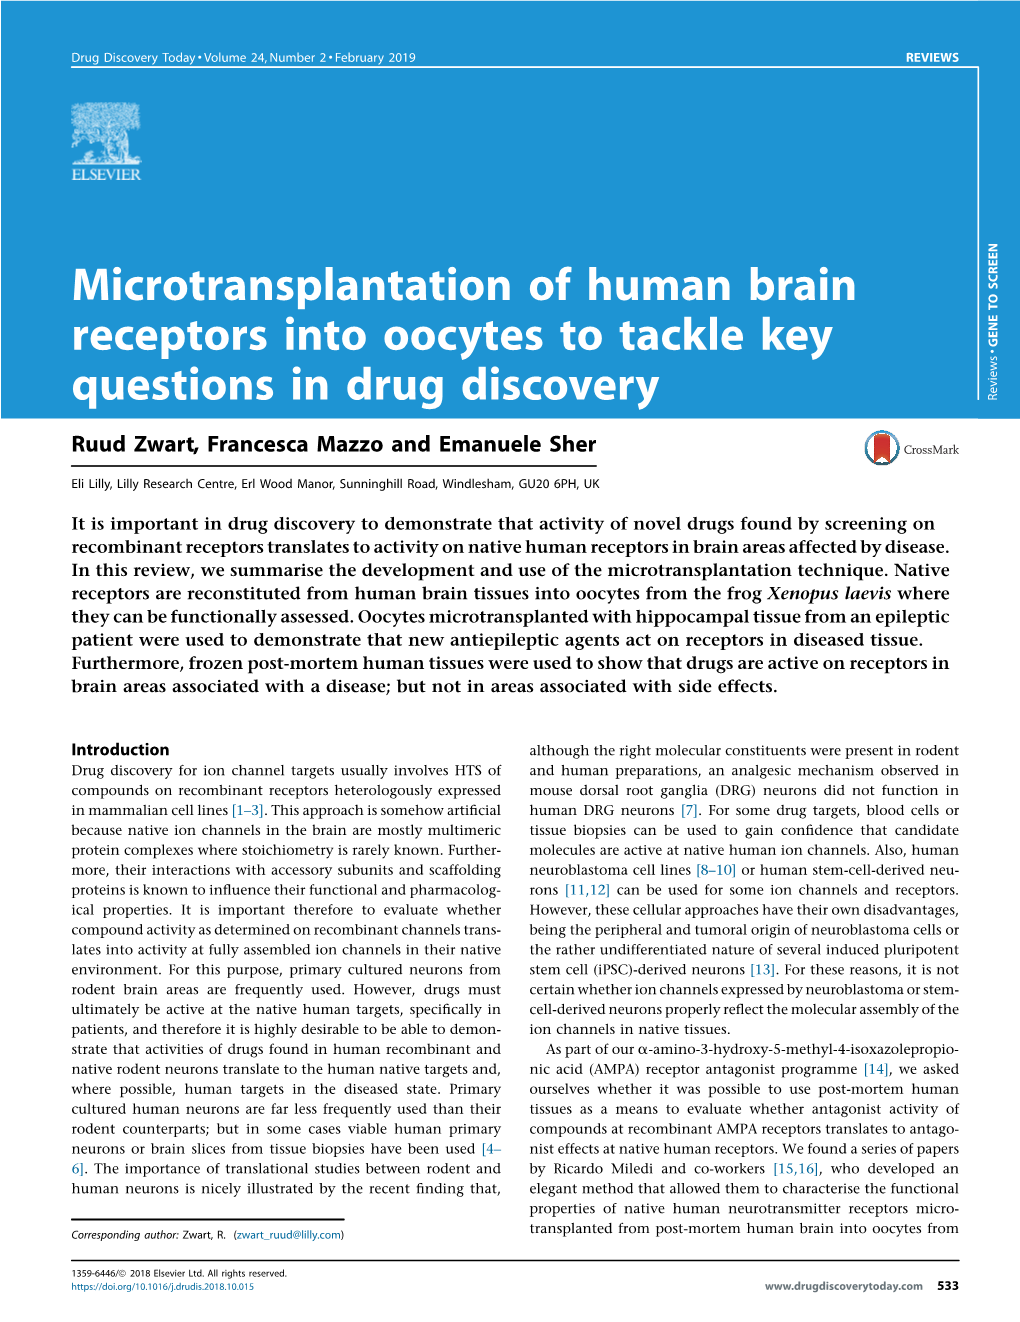 Microtransplantation of Human Brain Receptors Into Oocytes to Tackle Key